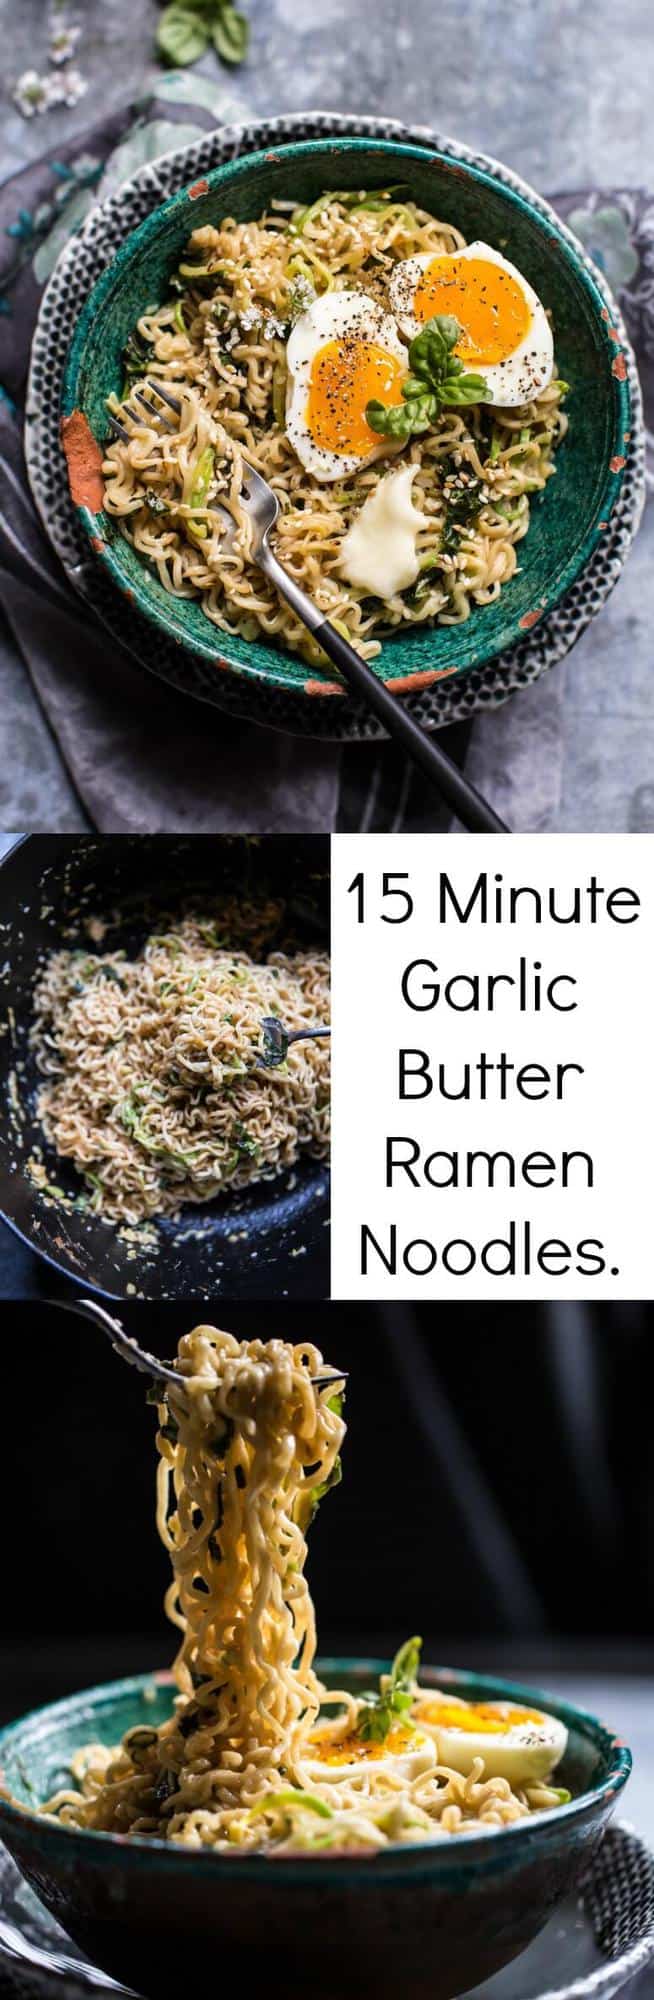 15 Minute Garlic Butter Ramen Noodles | halfbakedharvest.com @hbharvest